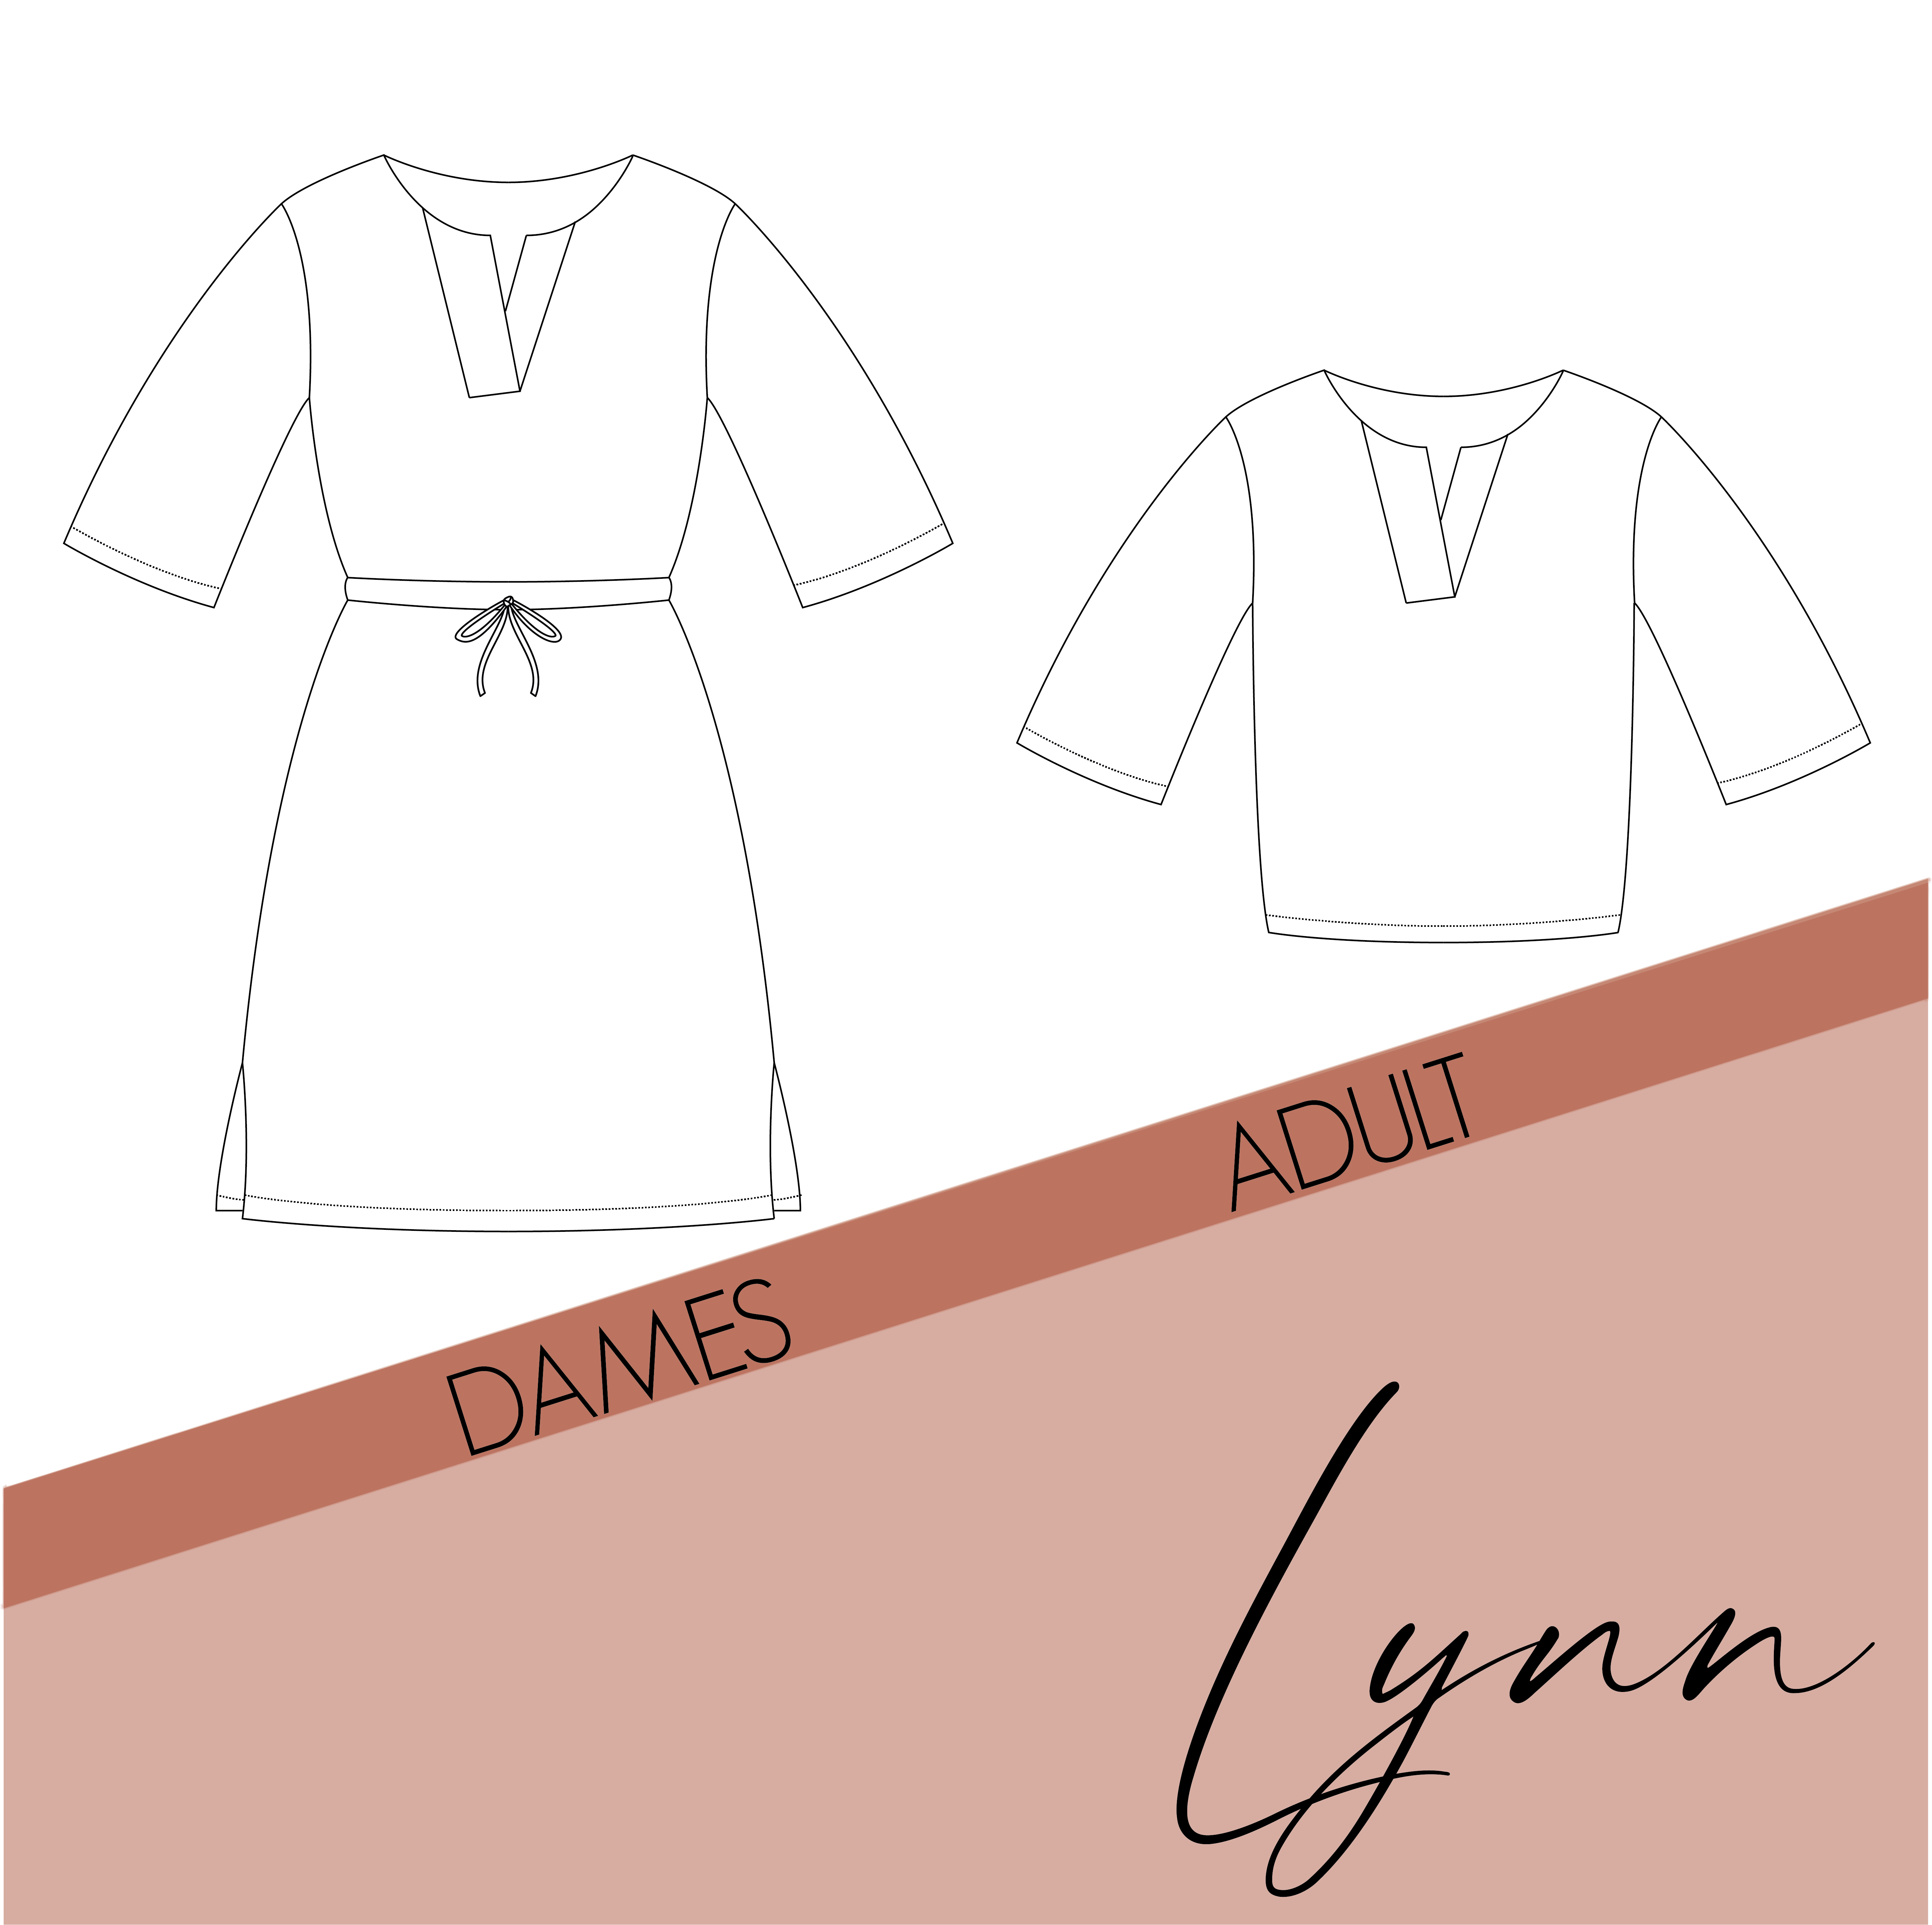 Lynn - dames